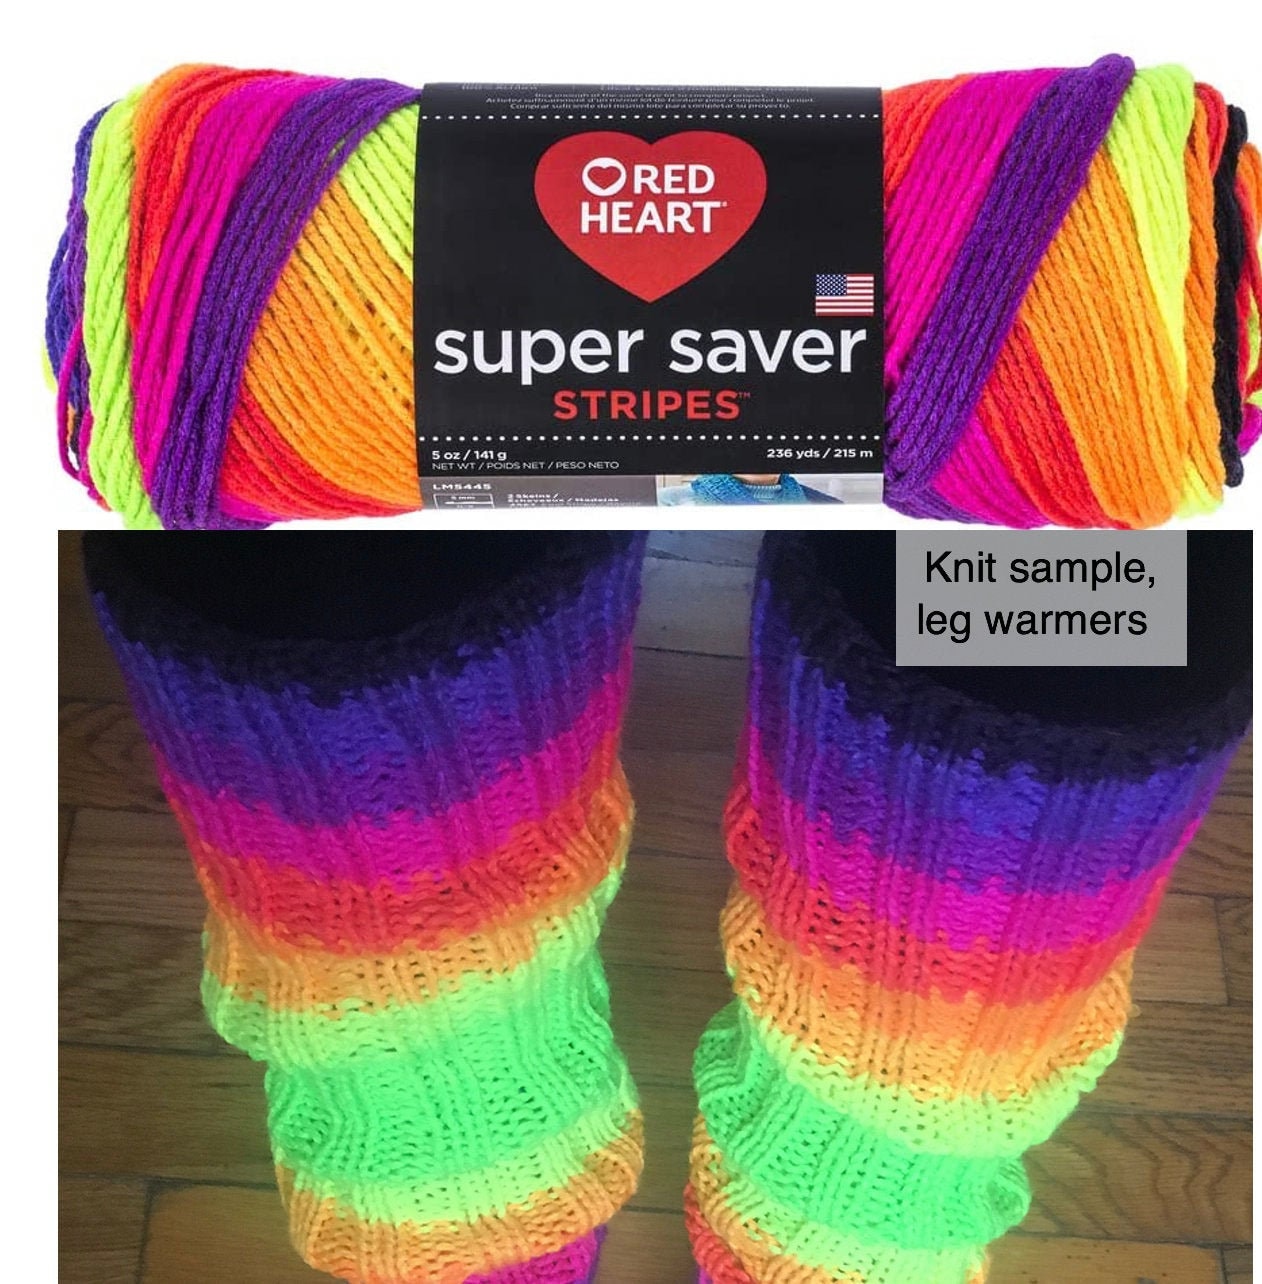 Super Saver Stripes by Red Heart Yarns, Bright Self Striping Yarn